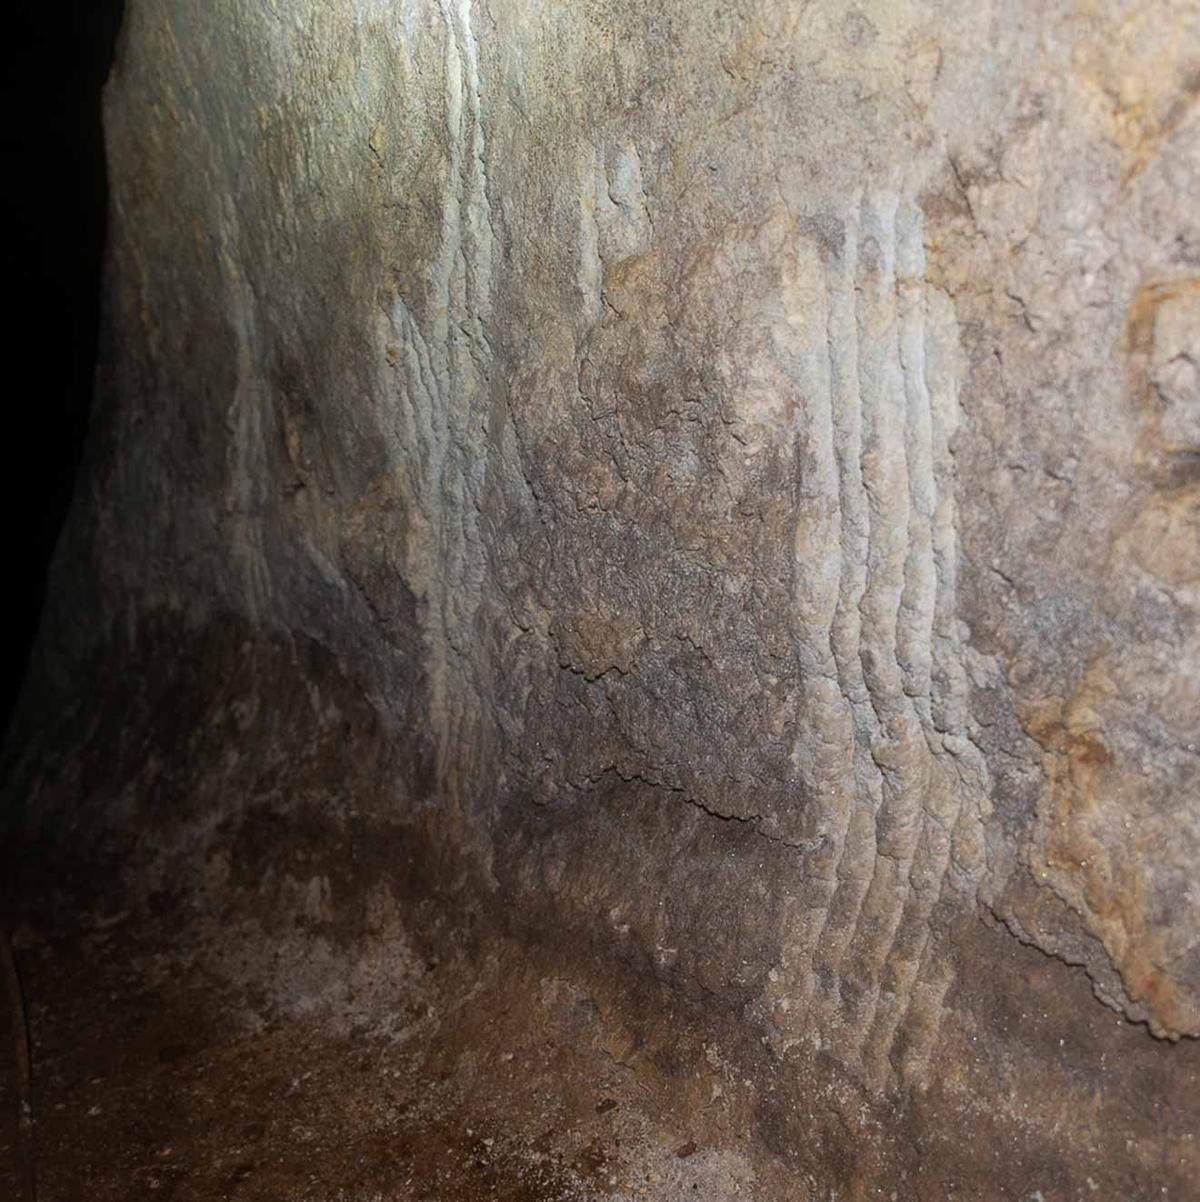 Bear claw marks appear throughout the cave system. (Courtesy of Ignacio Martín Lerma)